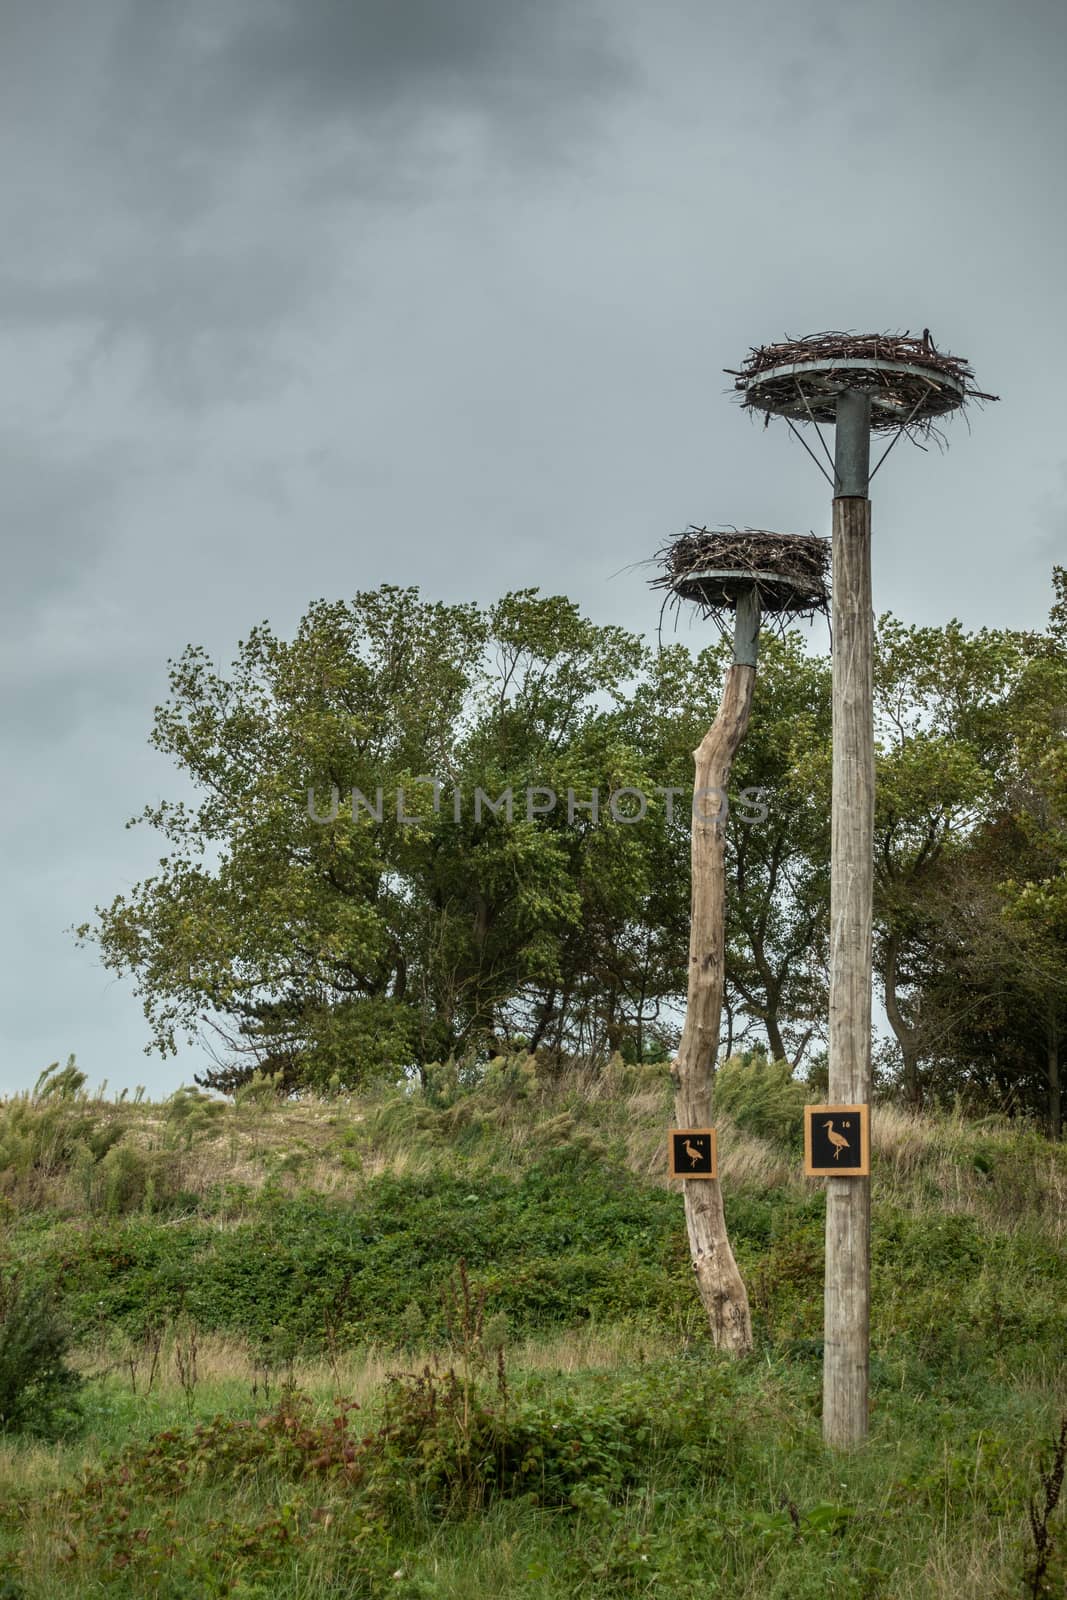 Stork nests on poles in Zwin Plane, Knokke-Heist, Belgium. by Claudine